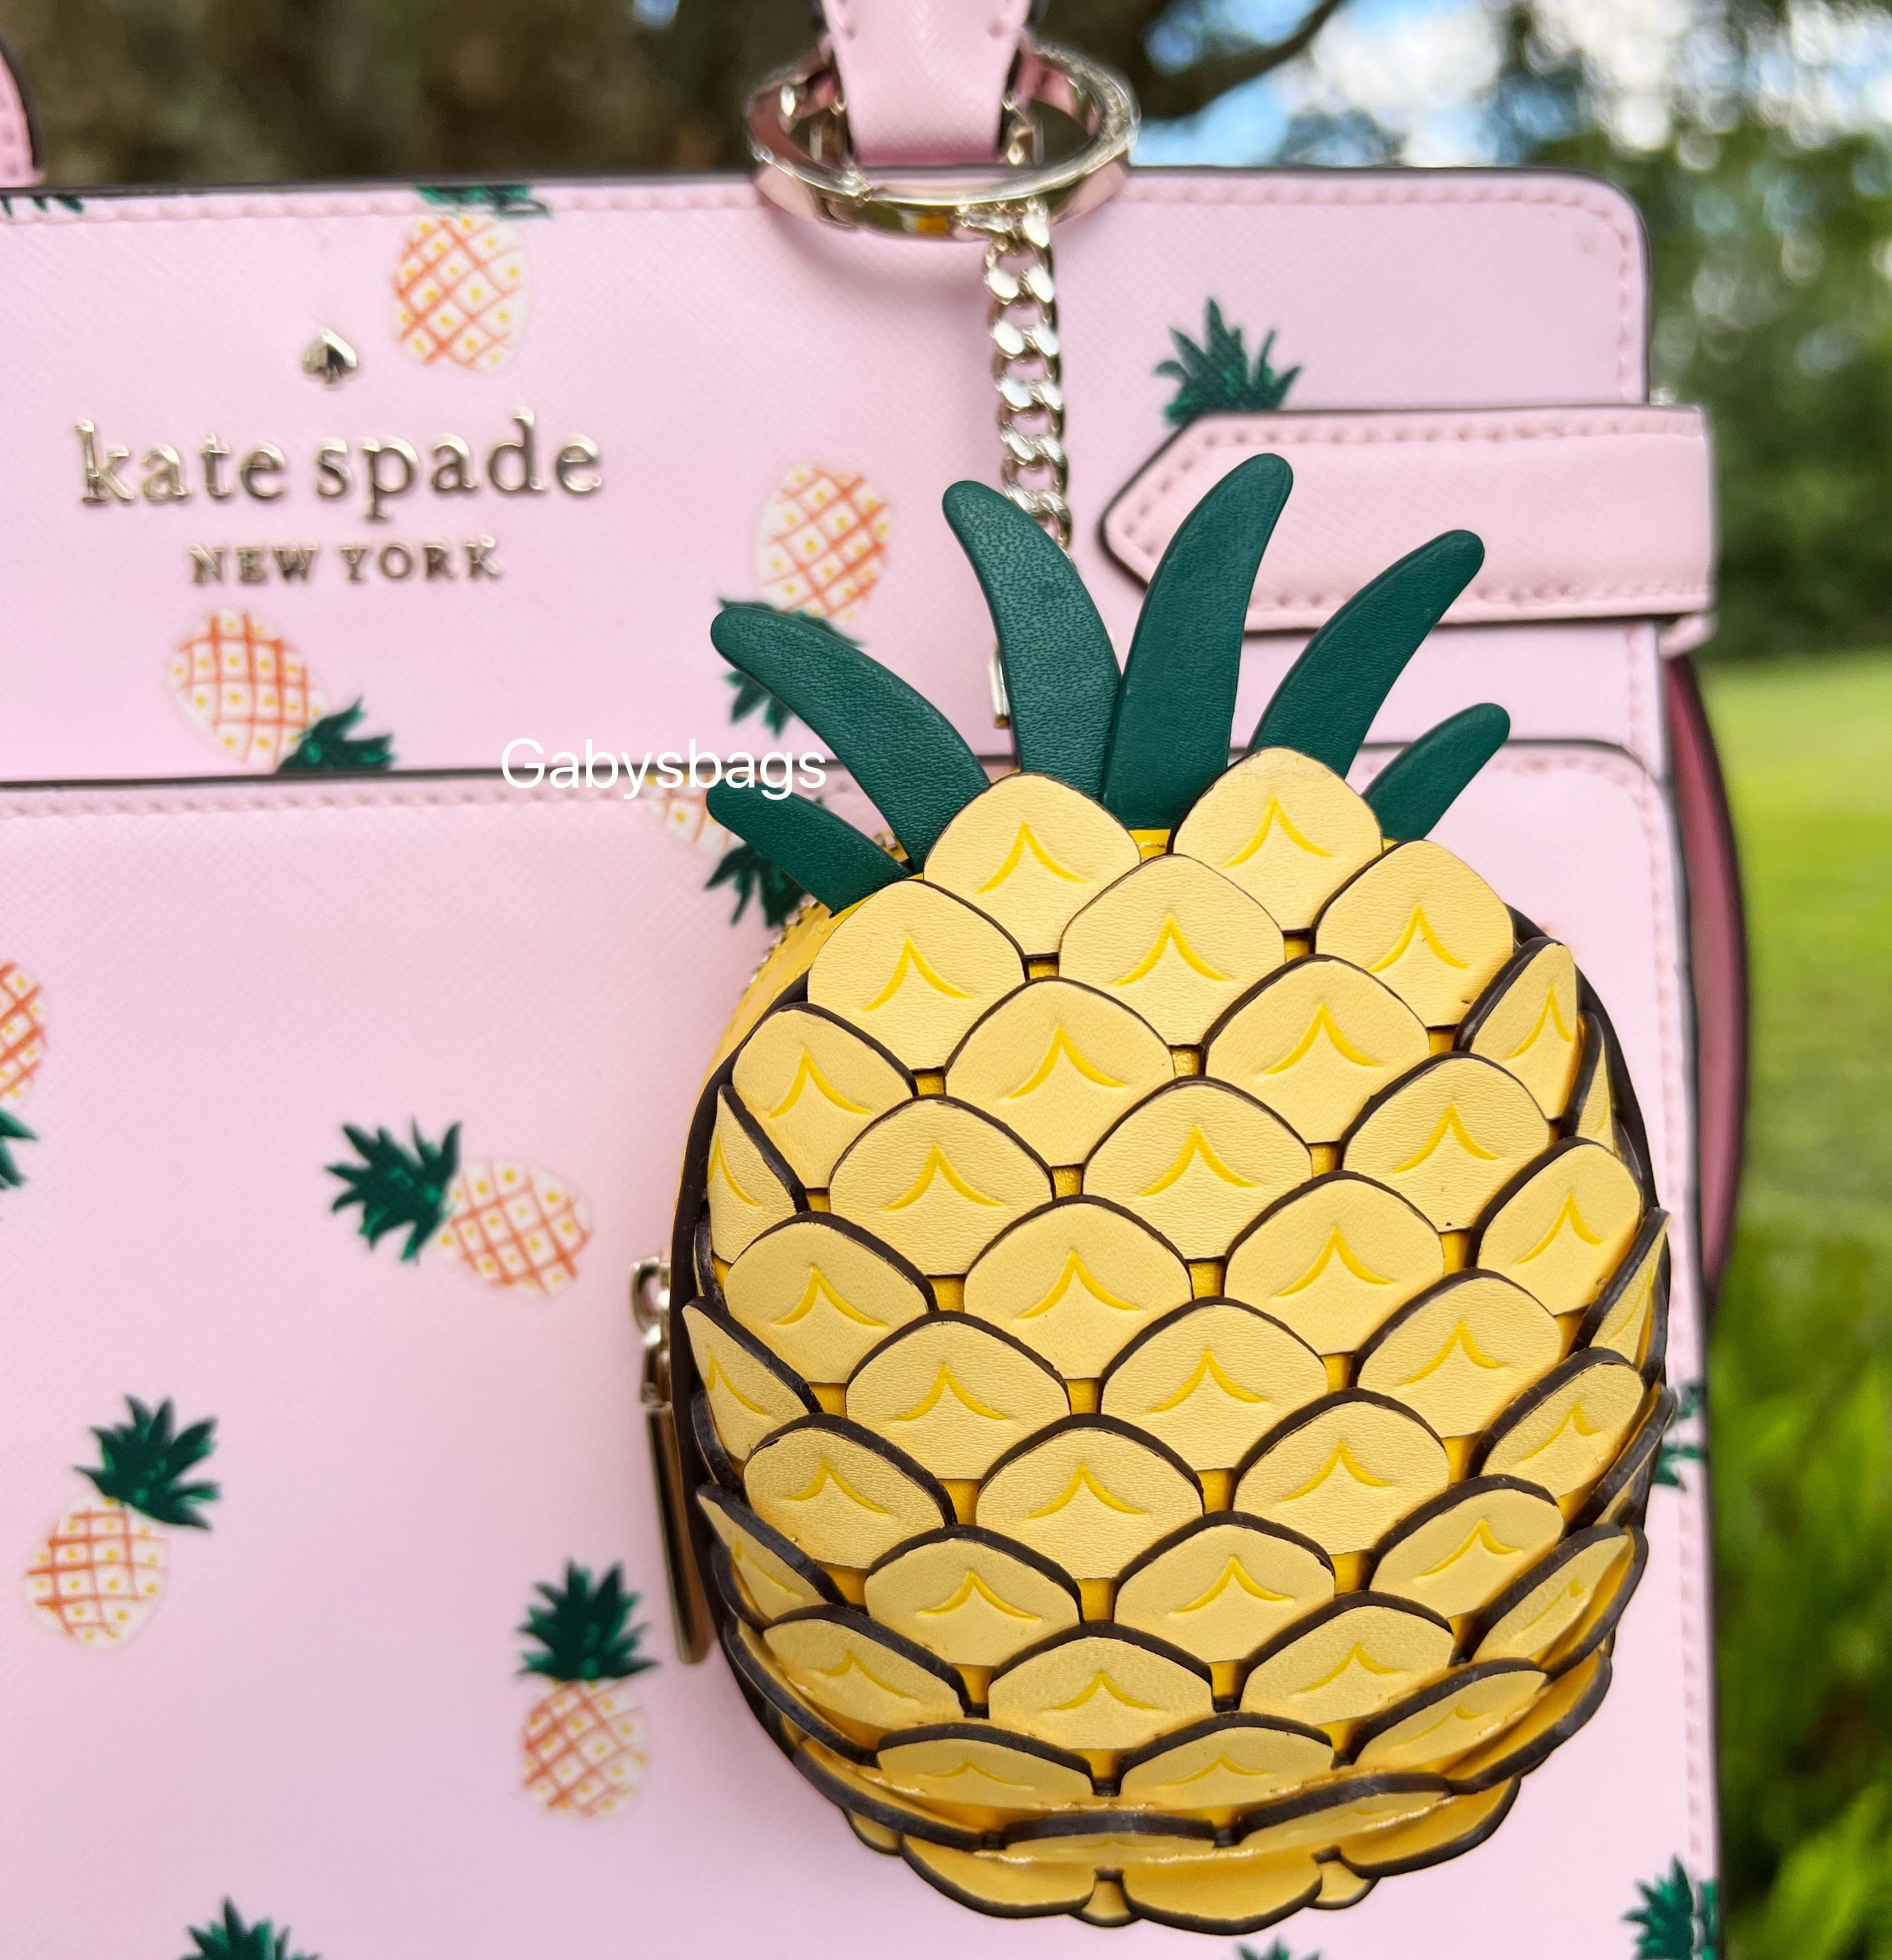 Kate Spade New York Pink & Green Pineapple Square Crossbody